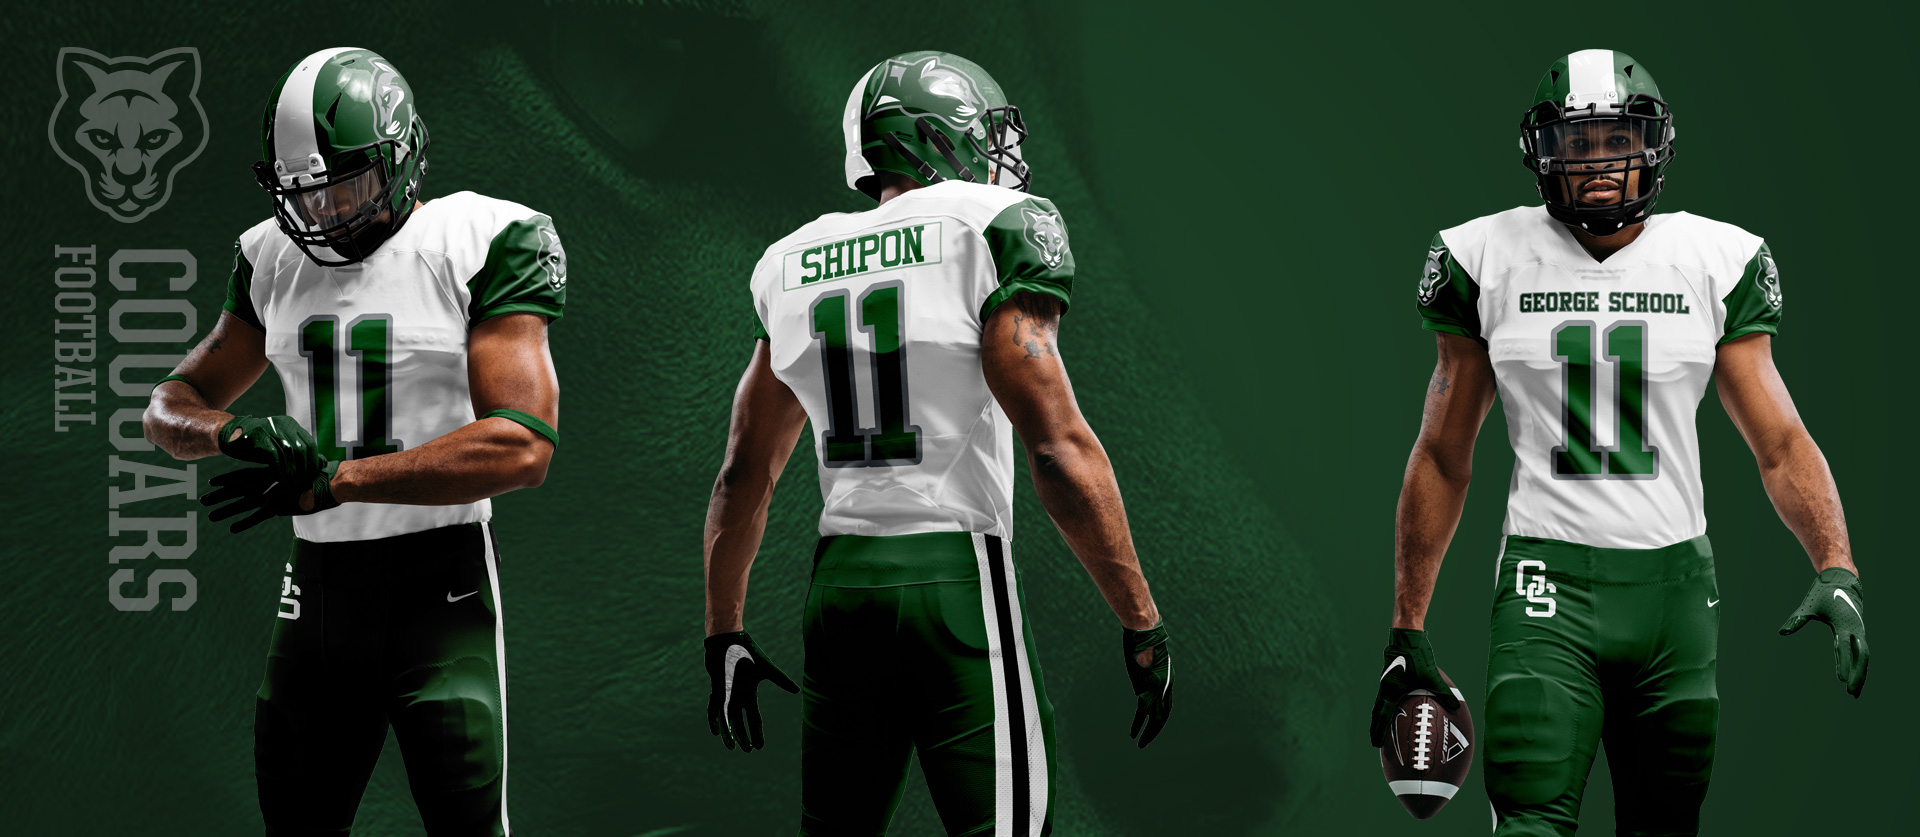 The George School - Football Uniform Green